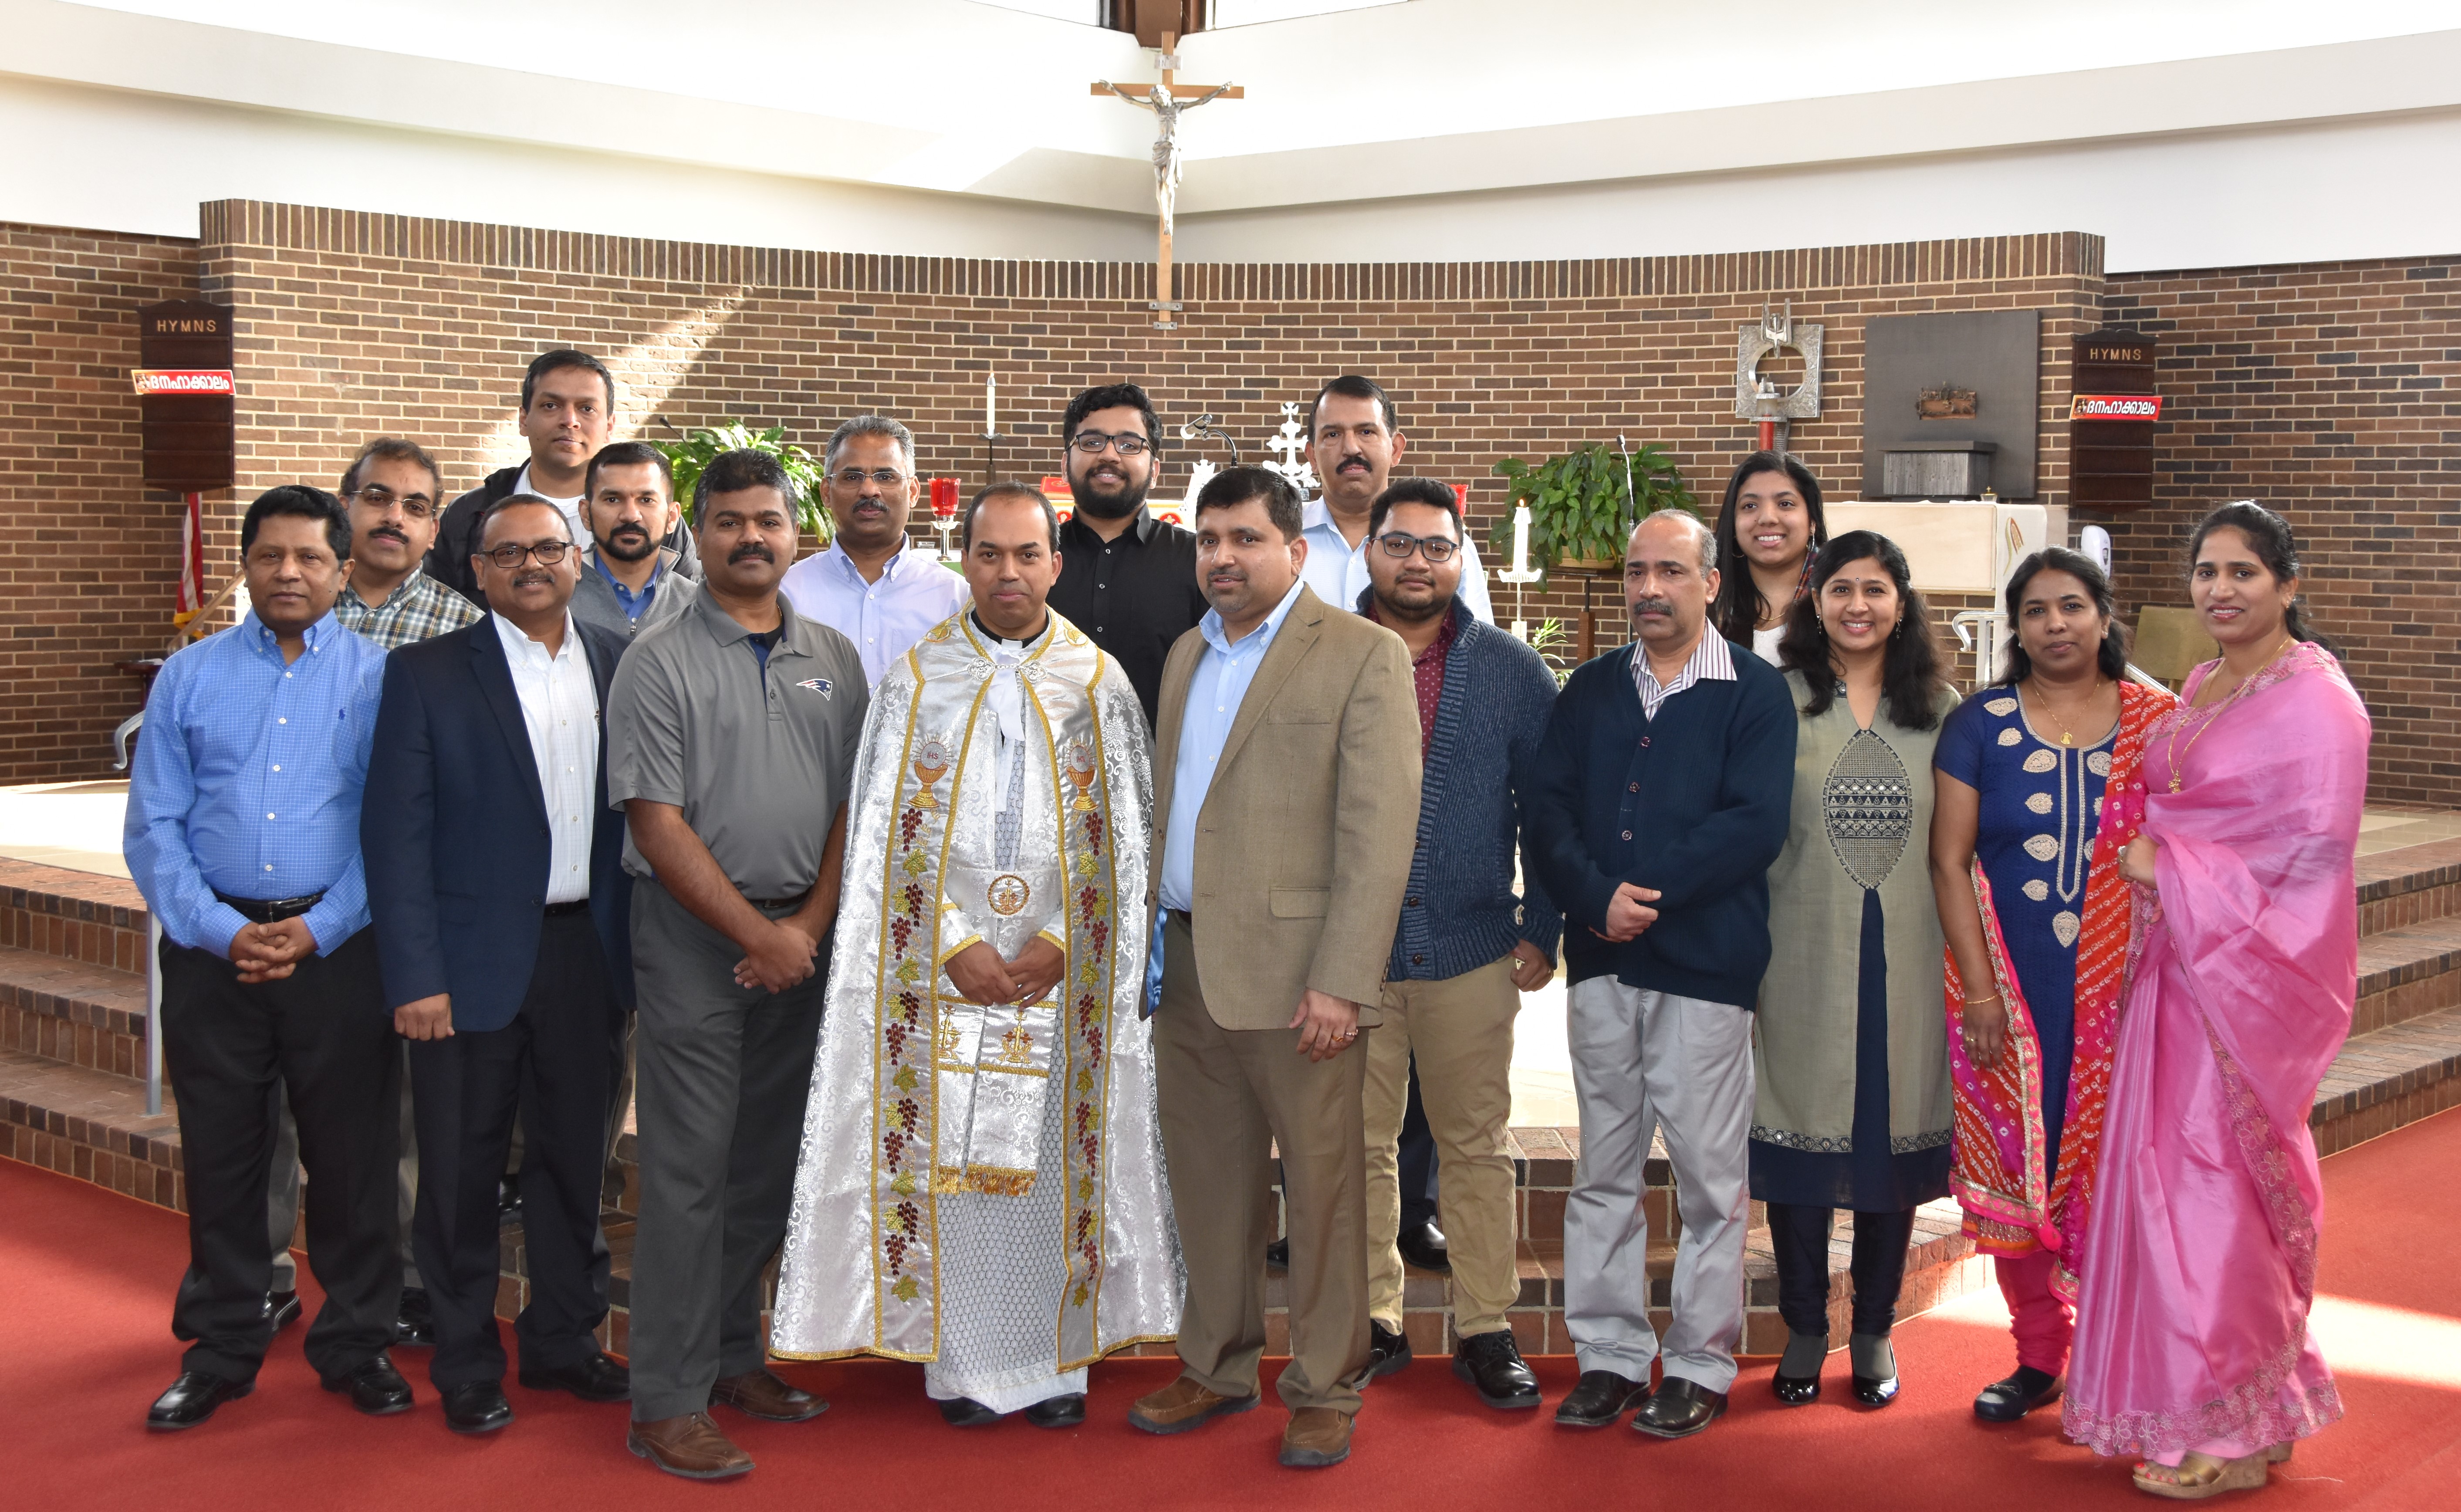 Parish Council members with Fr. Joseph Pullikattil